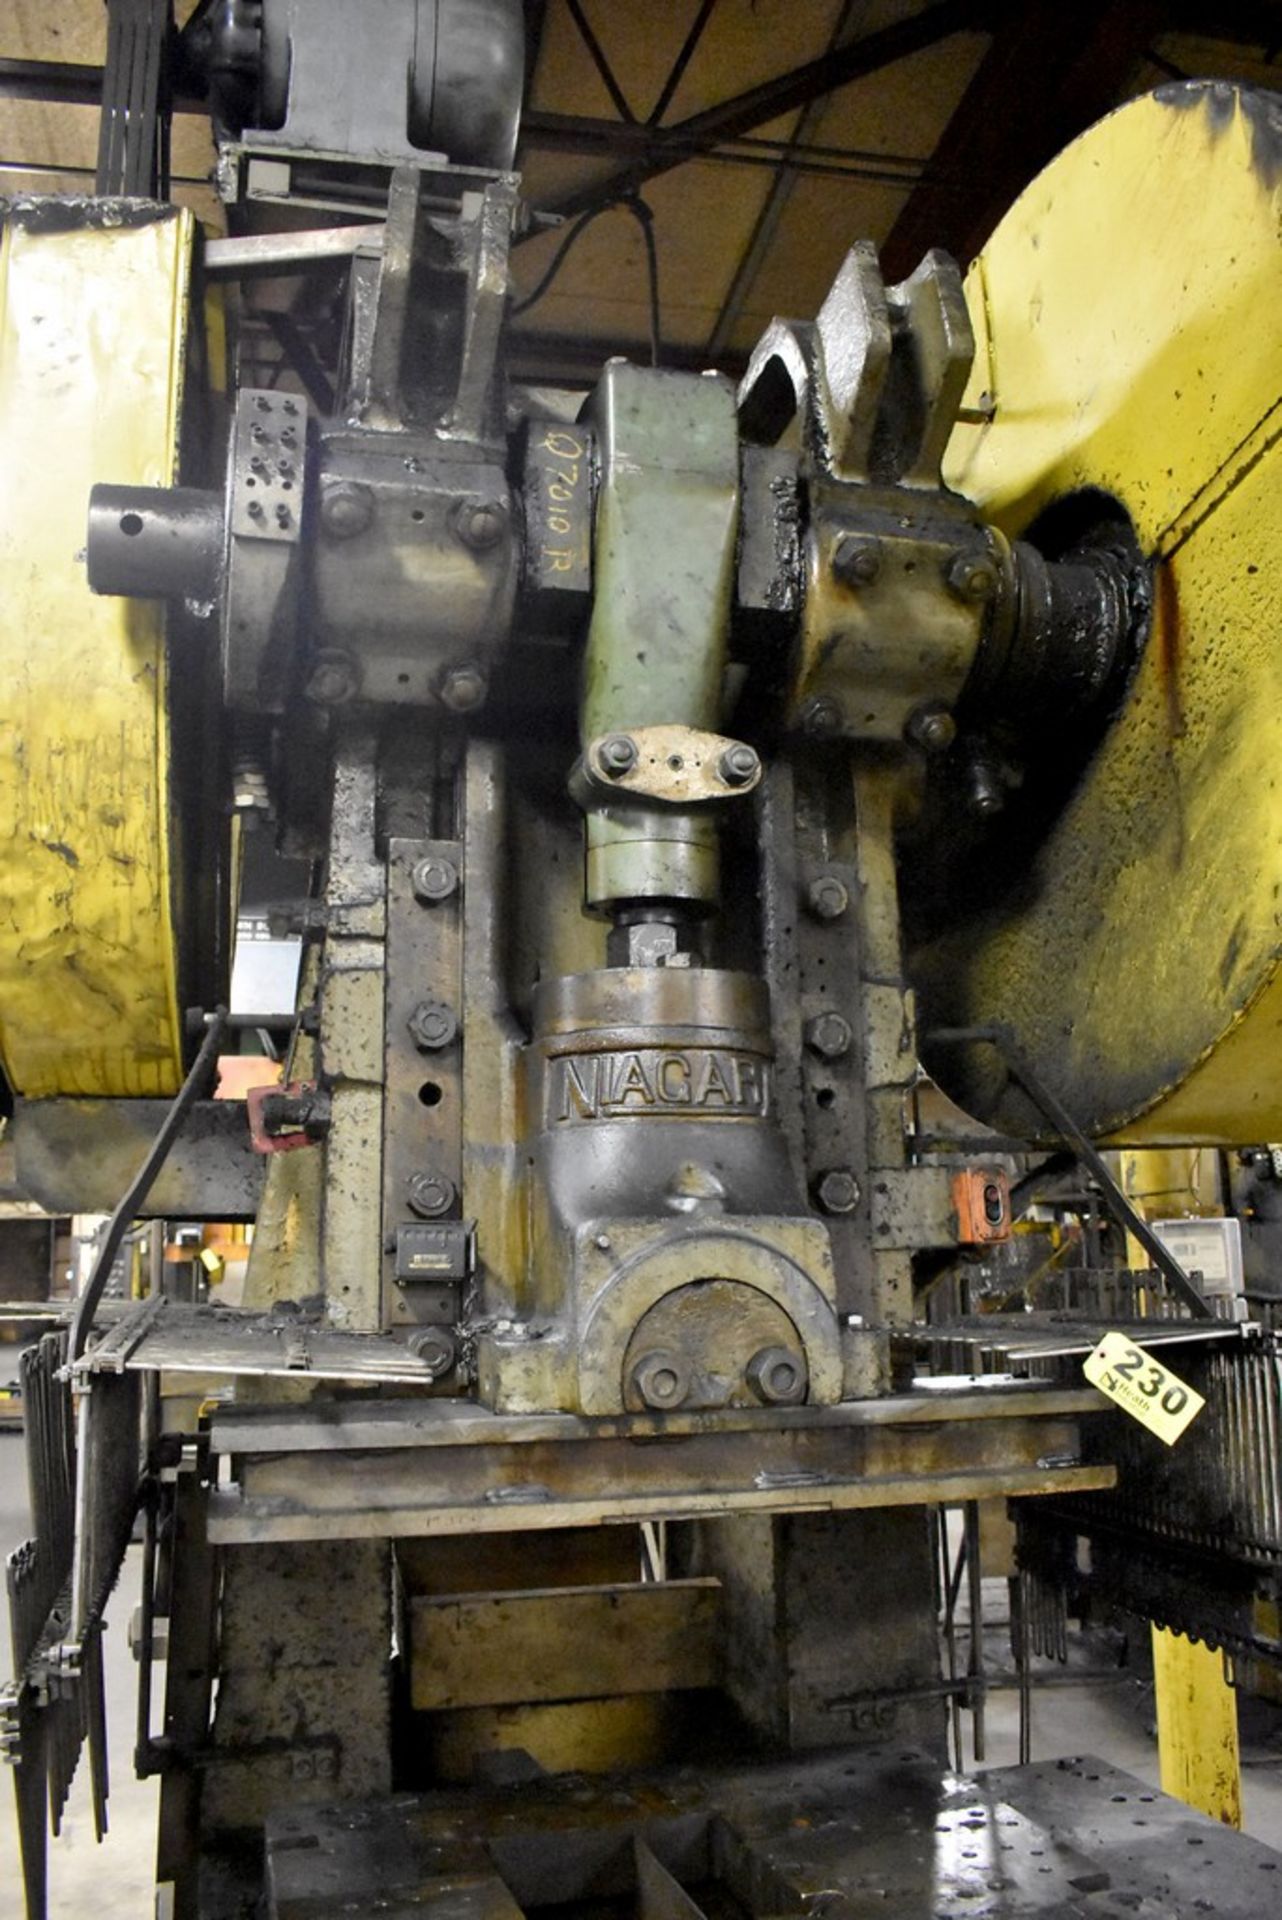 Niagara Model A5 1/2 Back Geared OBI Punch Press, 95 Ton - 8" Stroke - 42" x 29" Bed Area - 45 SPM - - Image 4 of 9